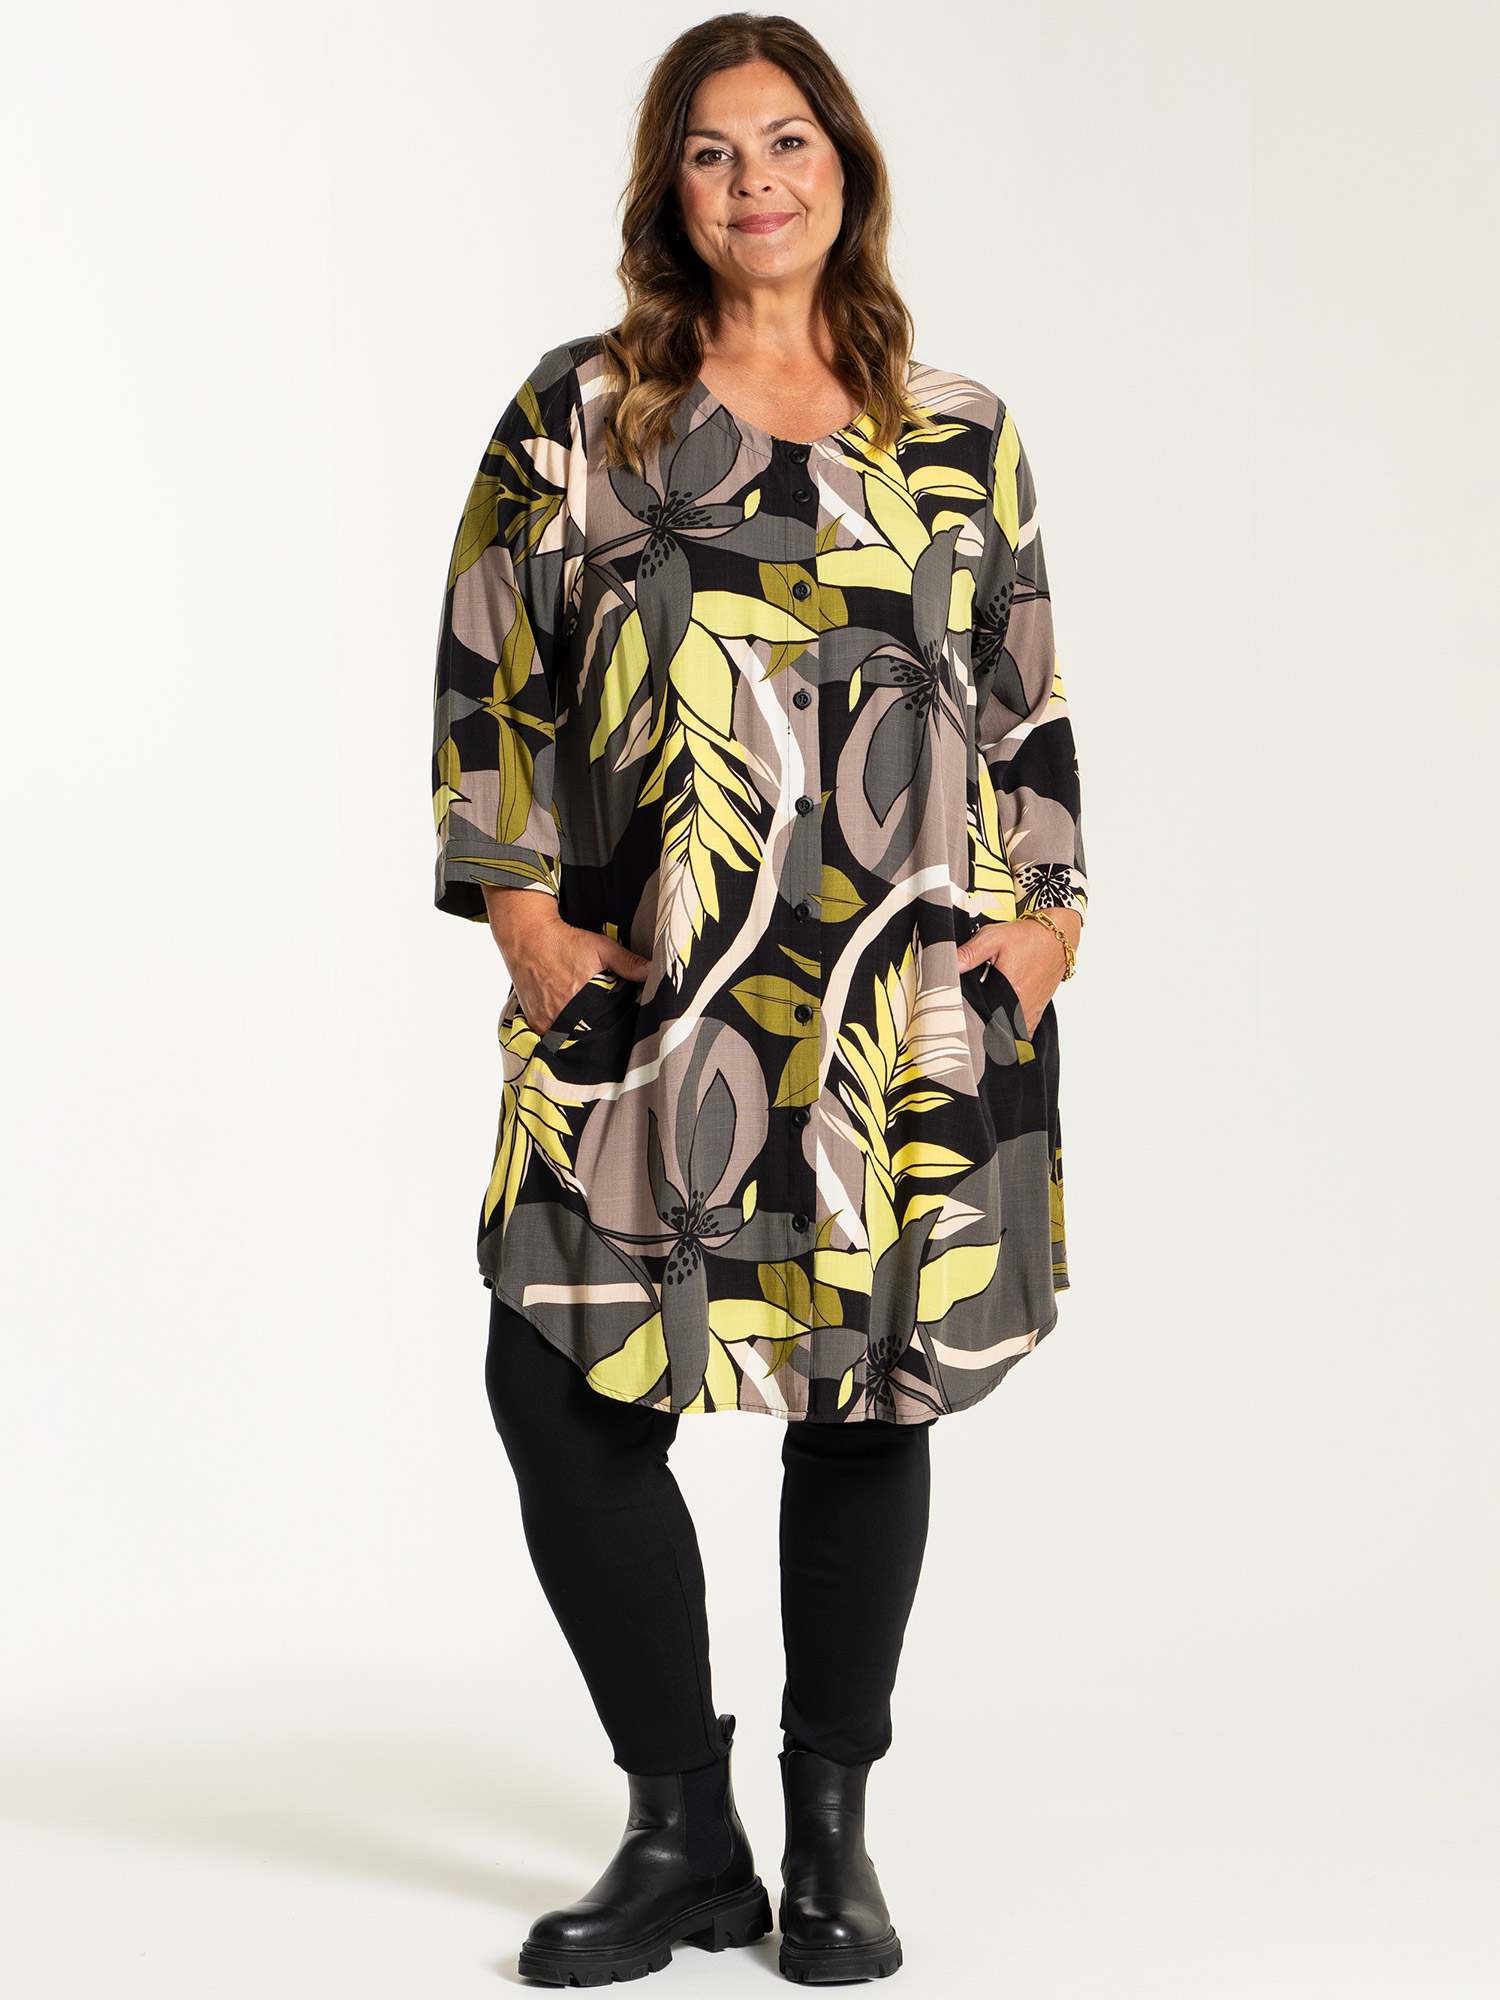 ELISABETH - Sort viskose skjorte tunika med print fra Gozzip